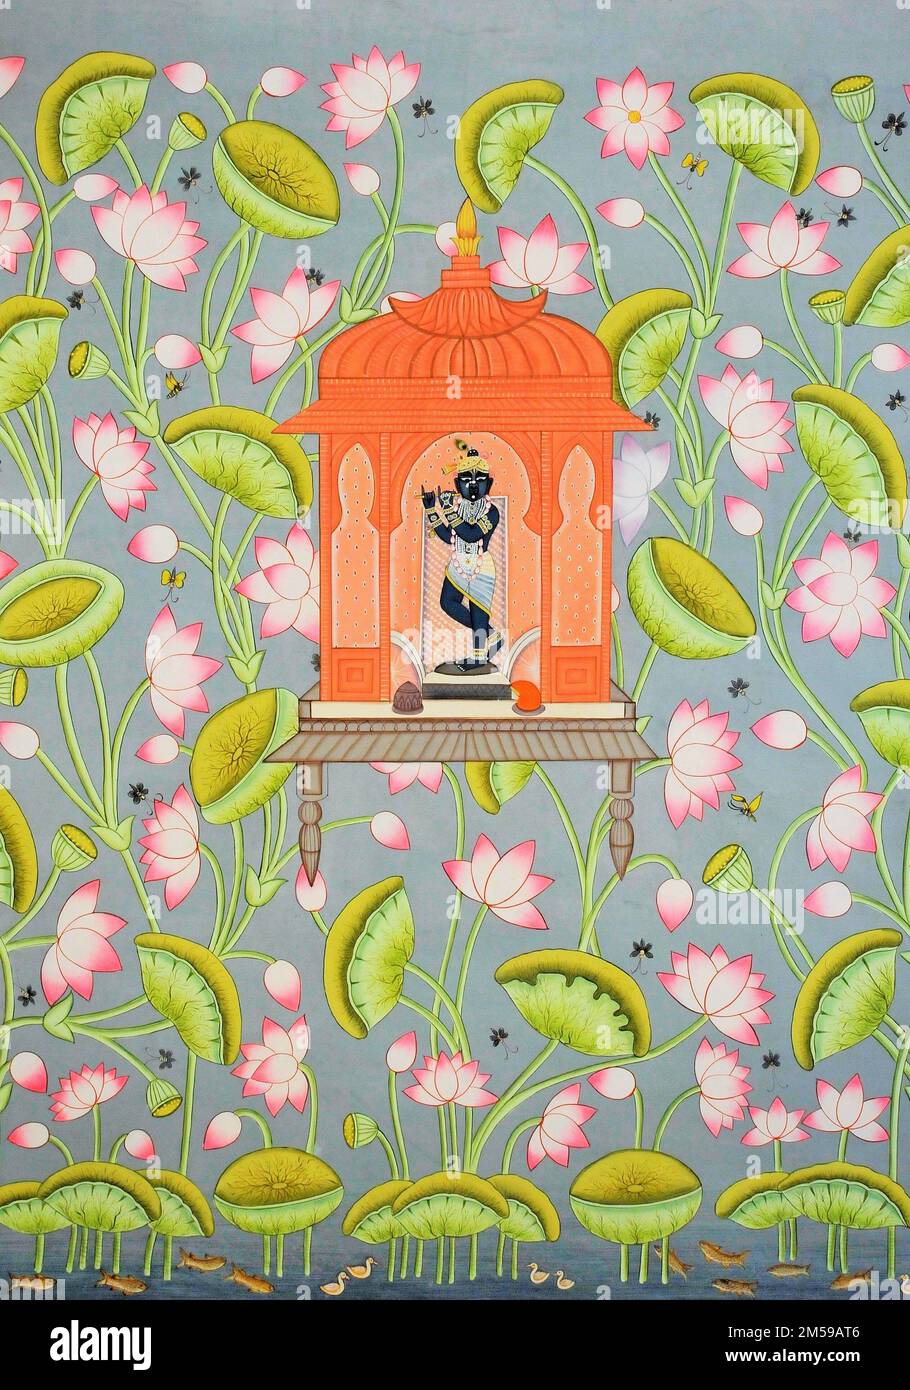 Lord Srinathji Nathdwara pichwai artwork painting Stock Photo